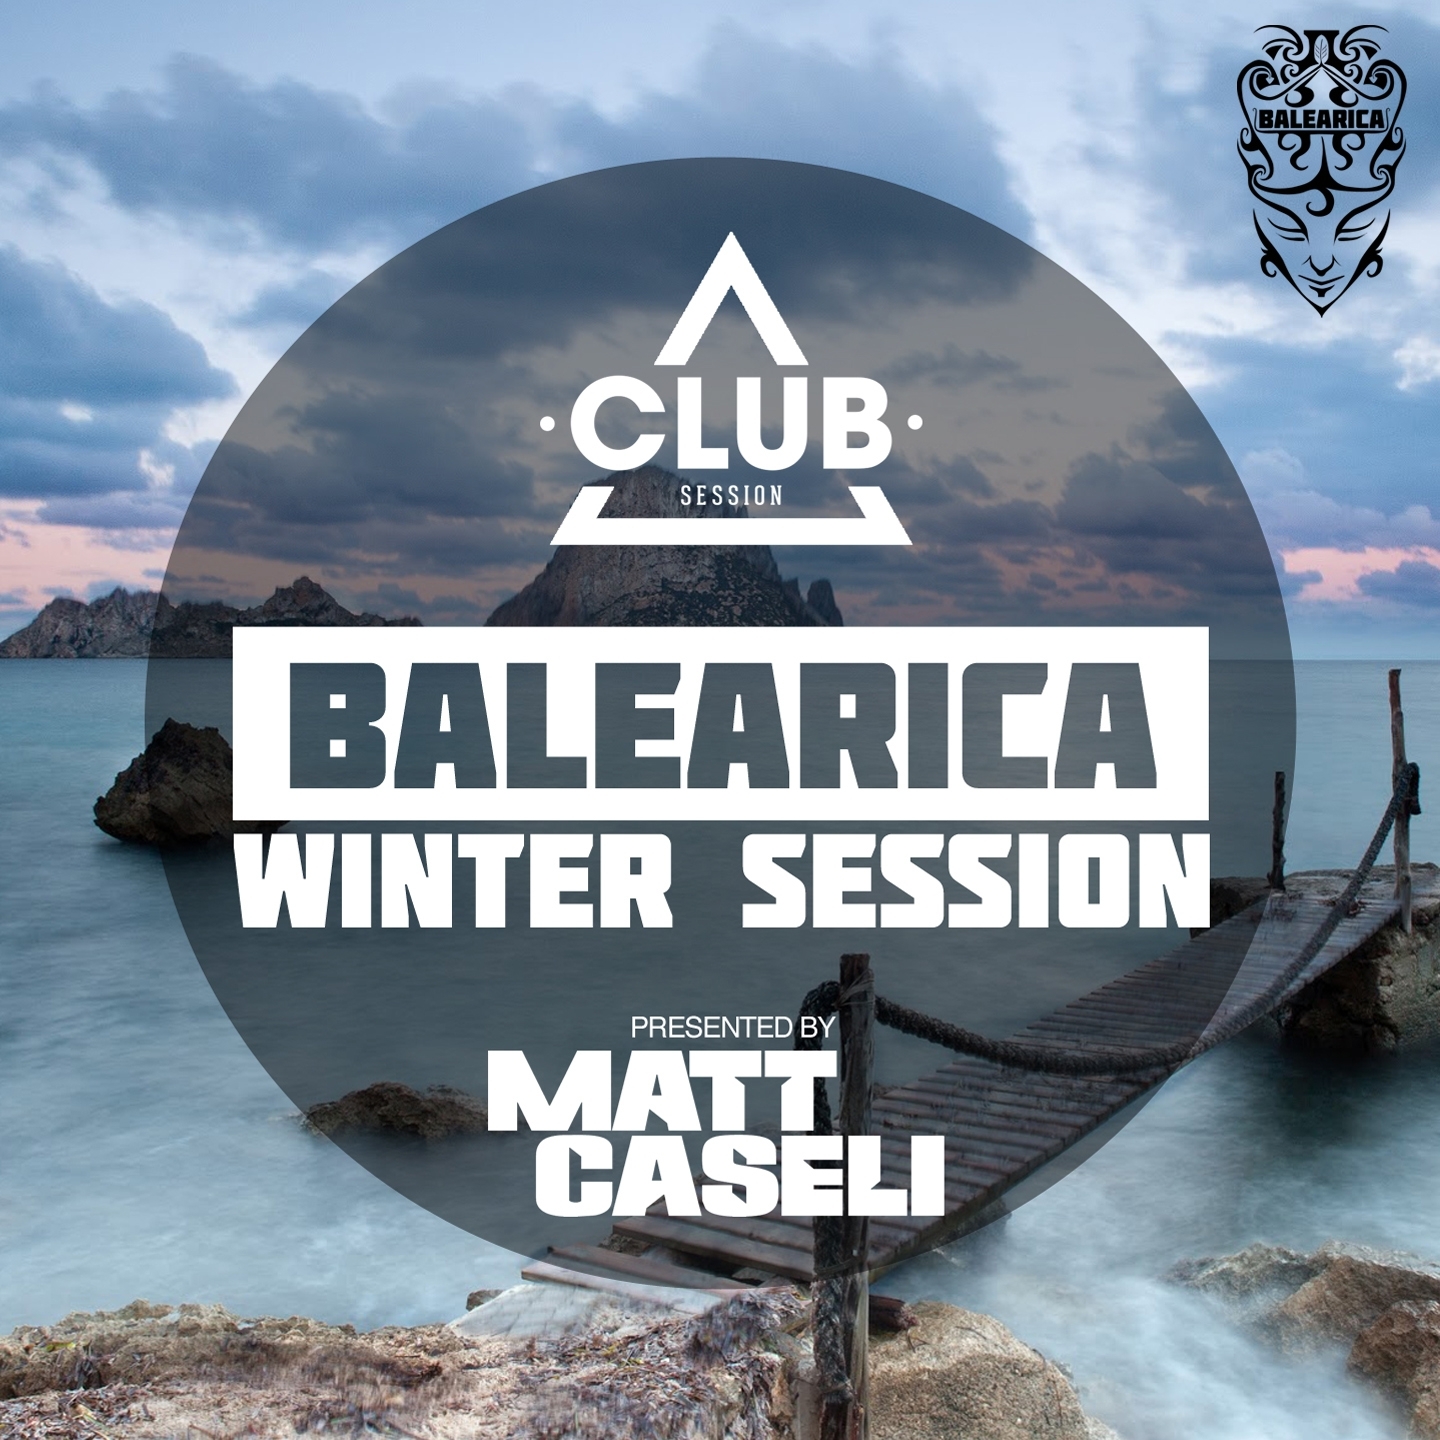 Balearica Winter Session